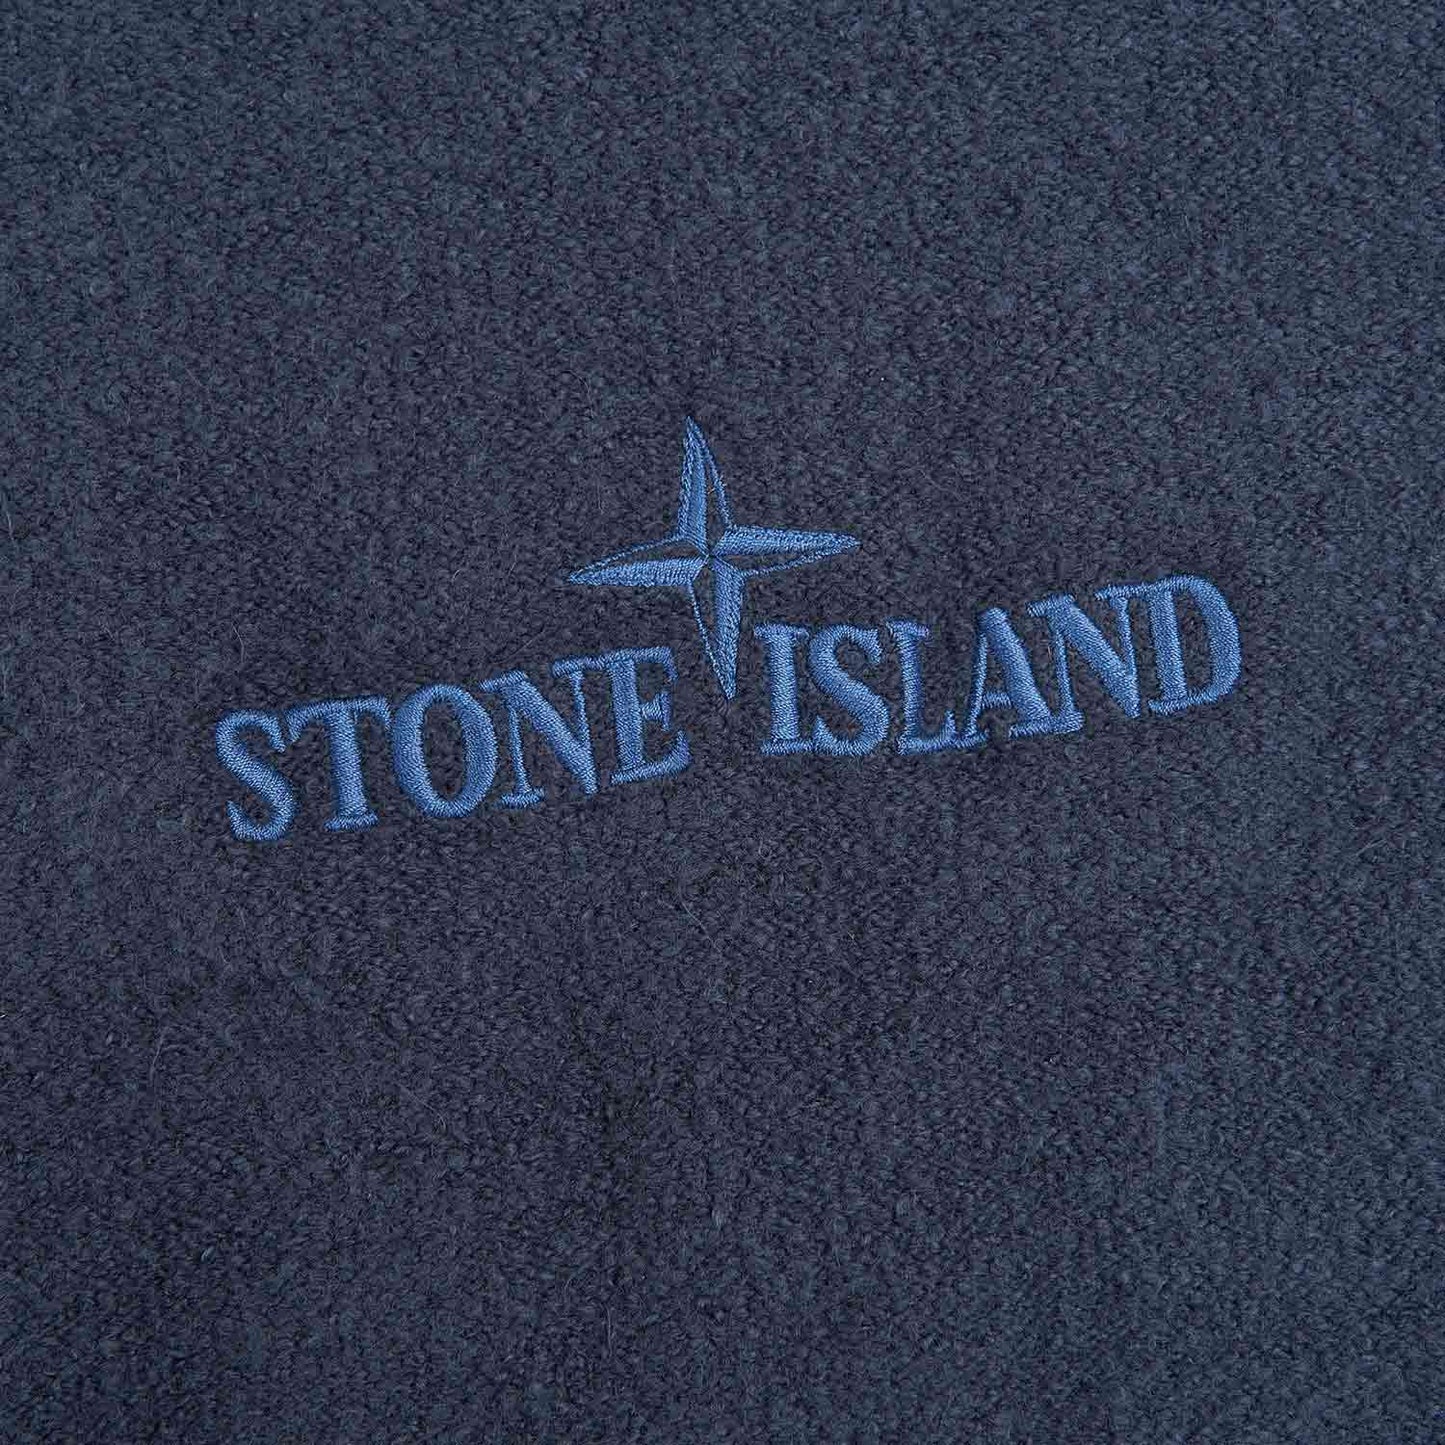 stone island pullover (dark blue)